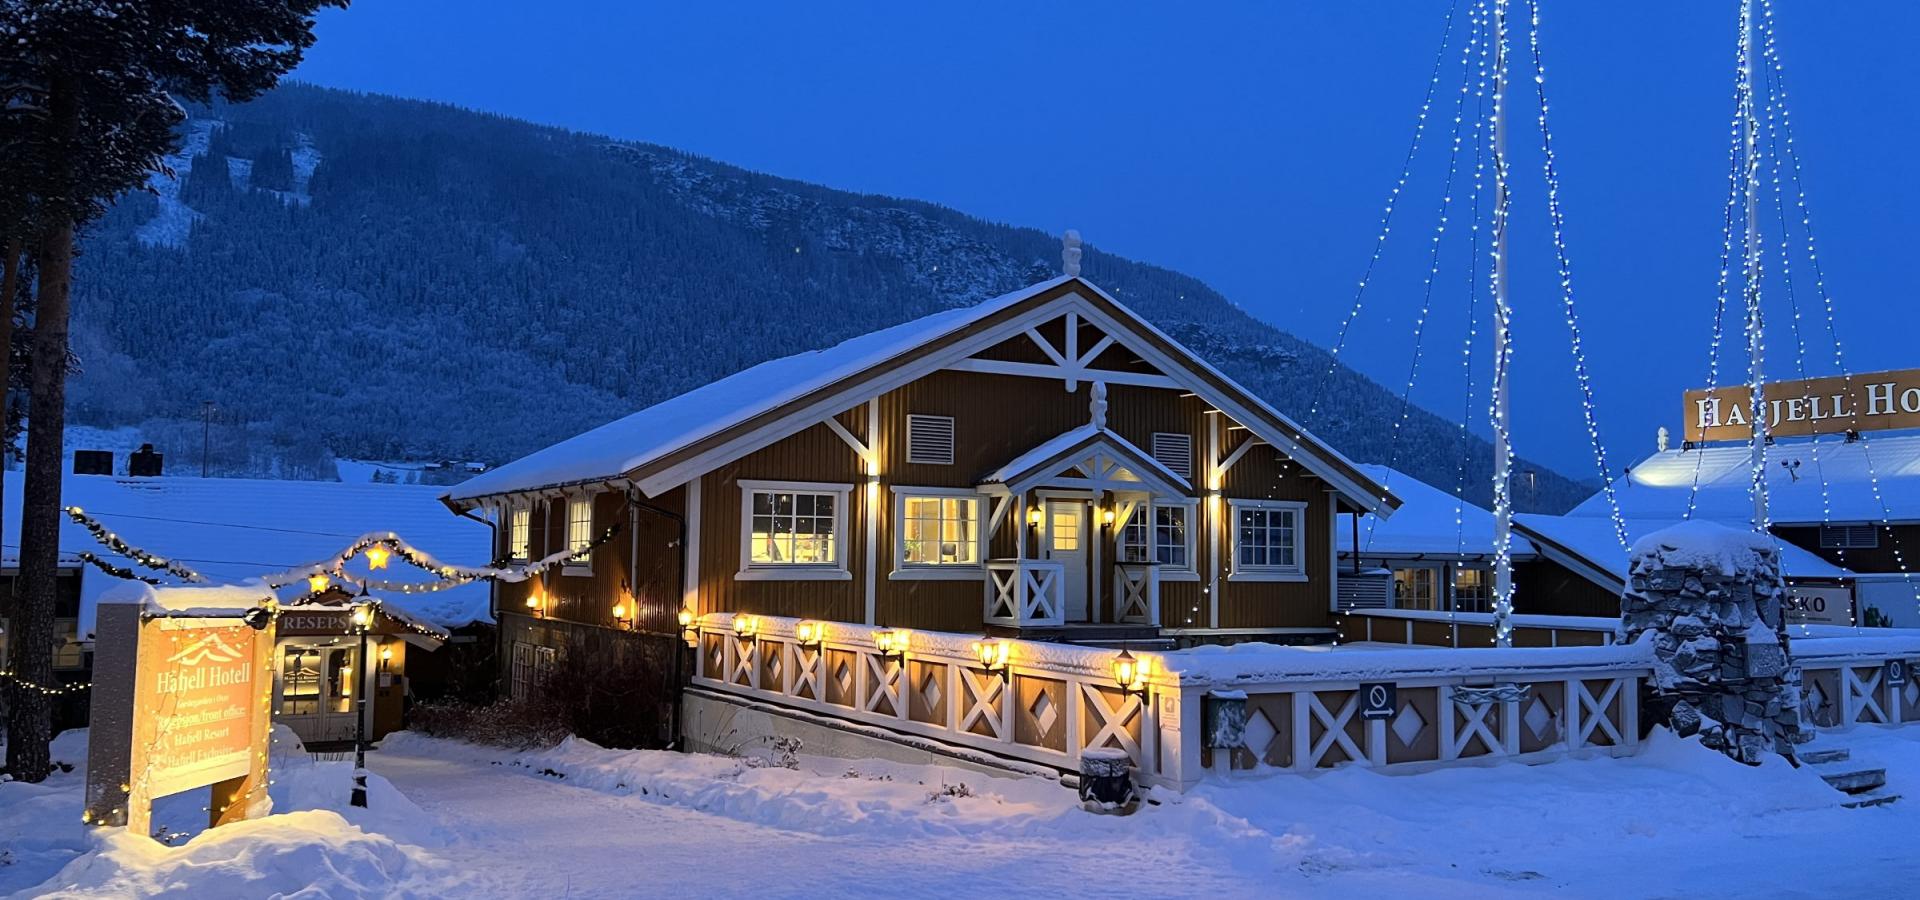 New Year | Hafjell Resort